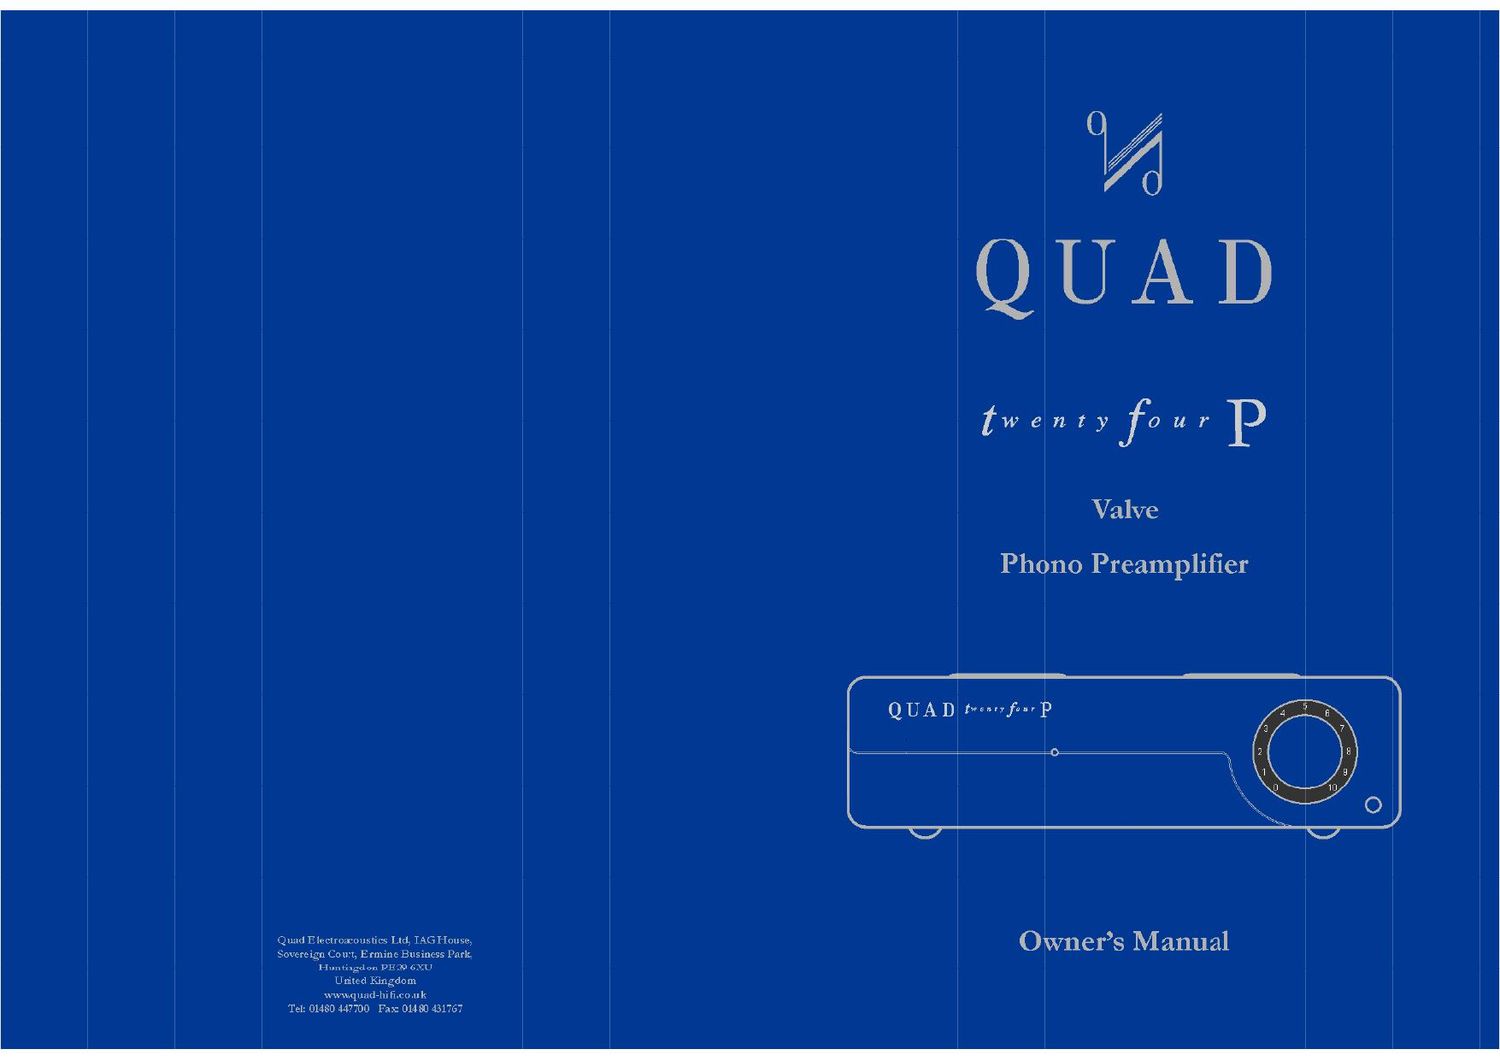 Quad 24 P Owners Manual